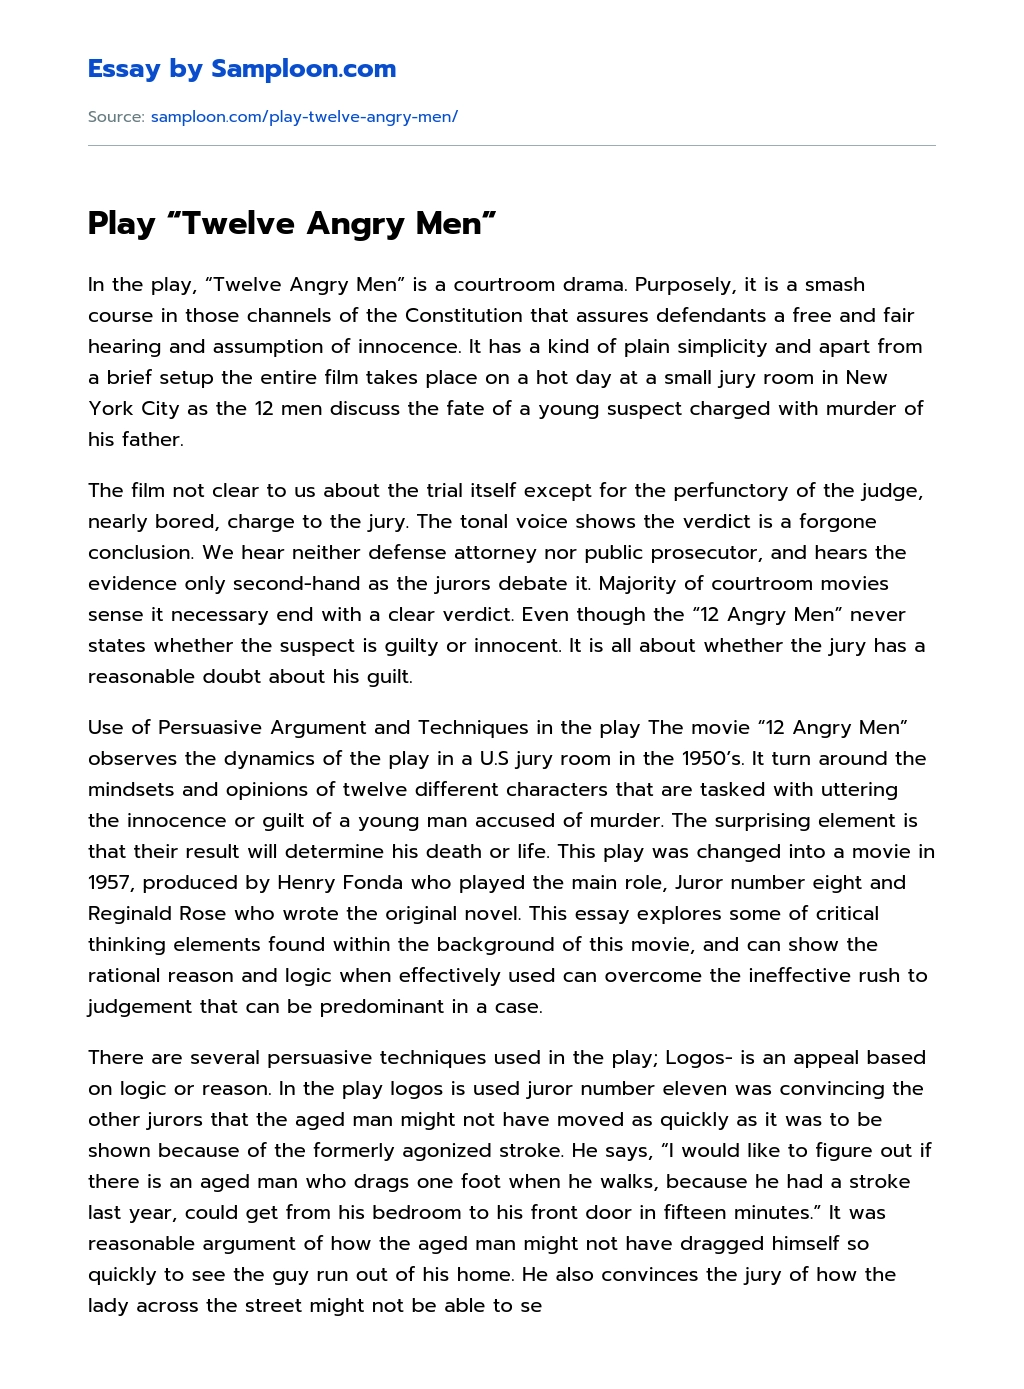 Play “Twelve Angry Men” essay